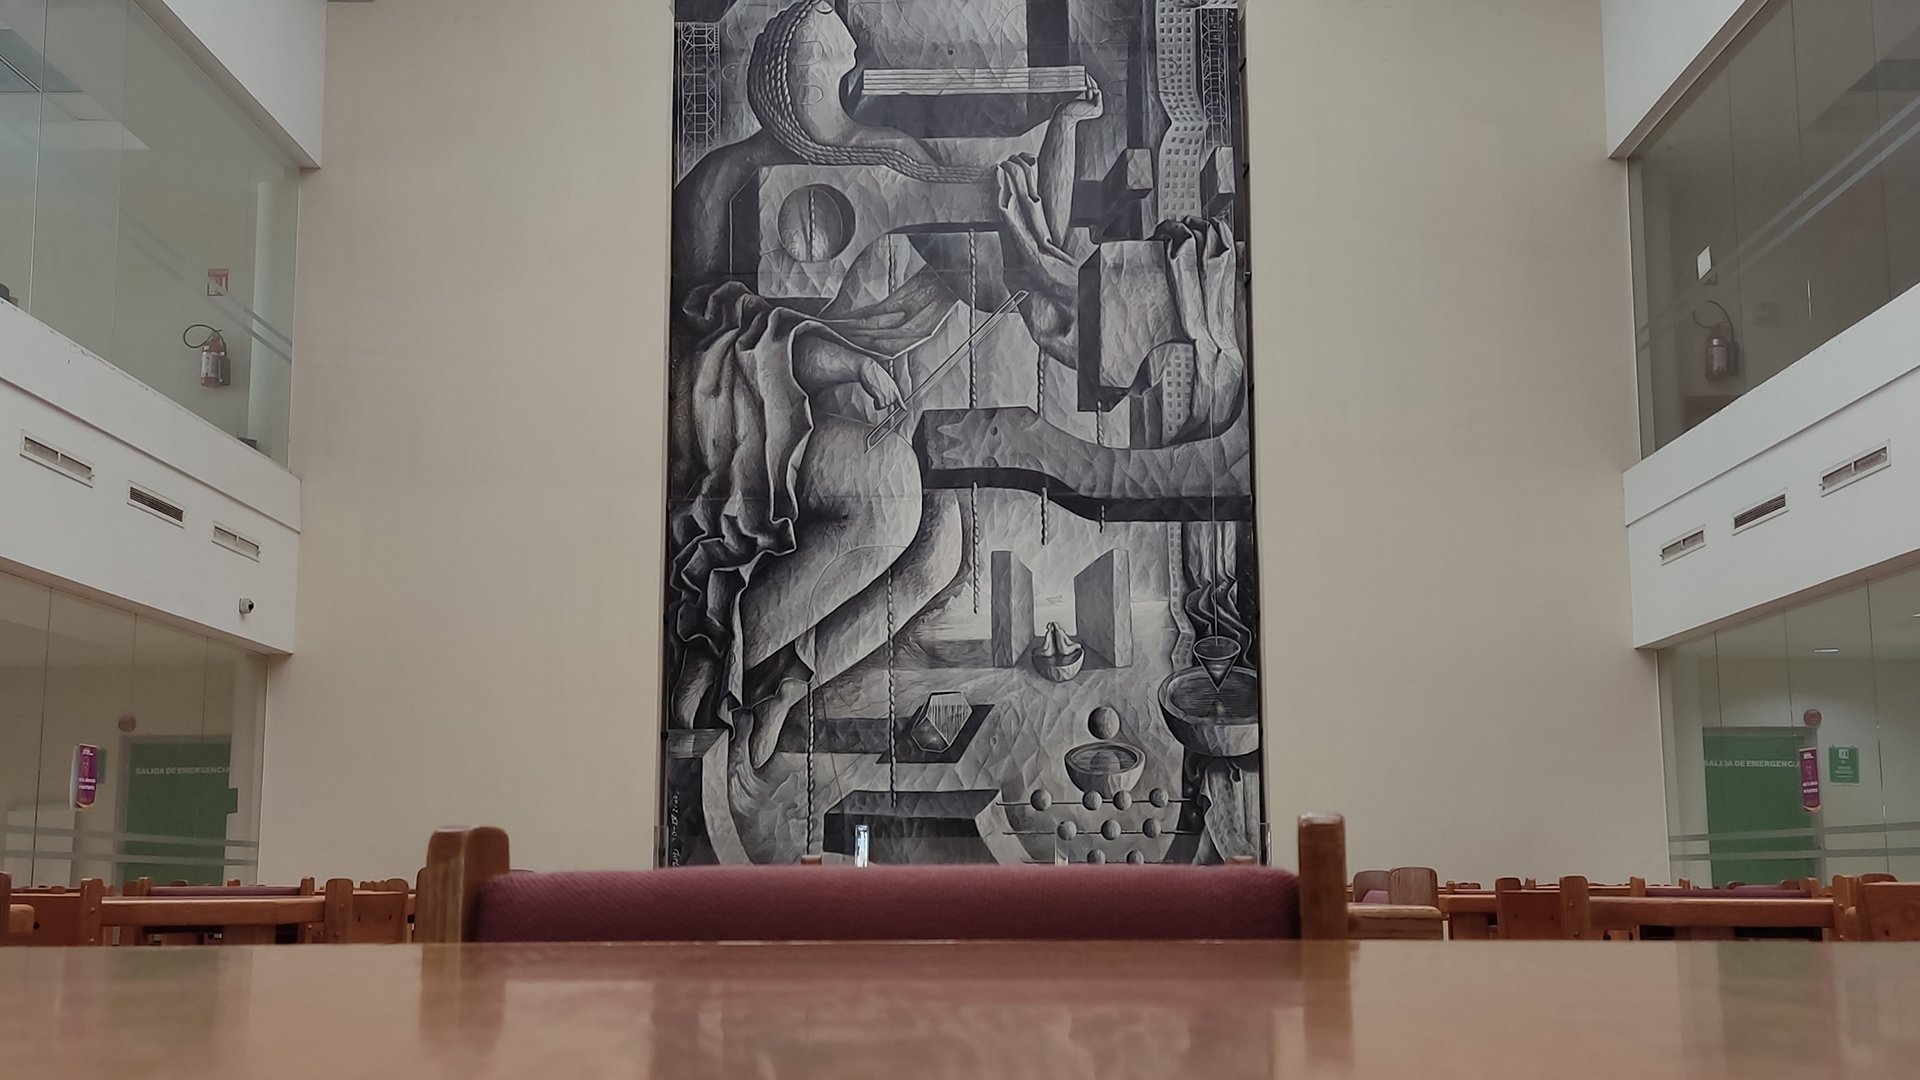 fing-edificio-mural-biblioteca-1920x1080.jpg